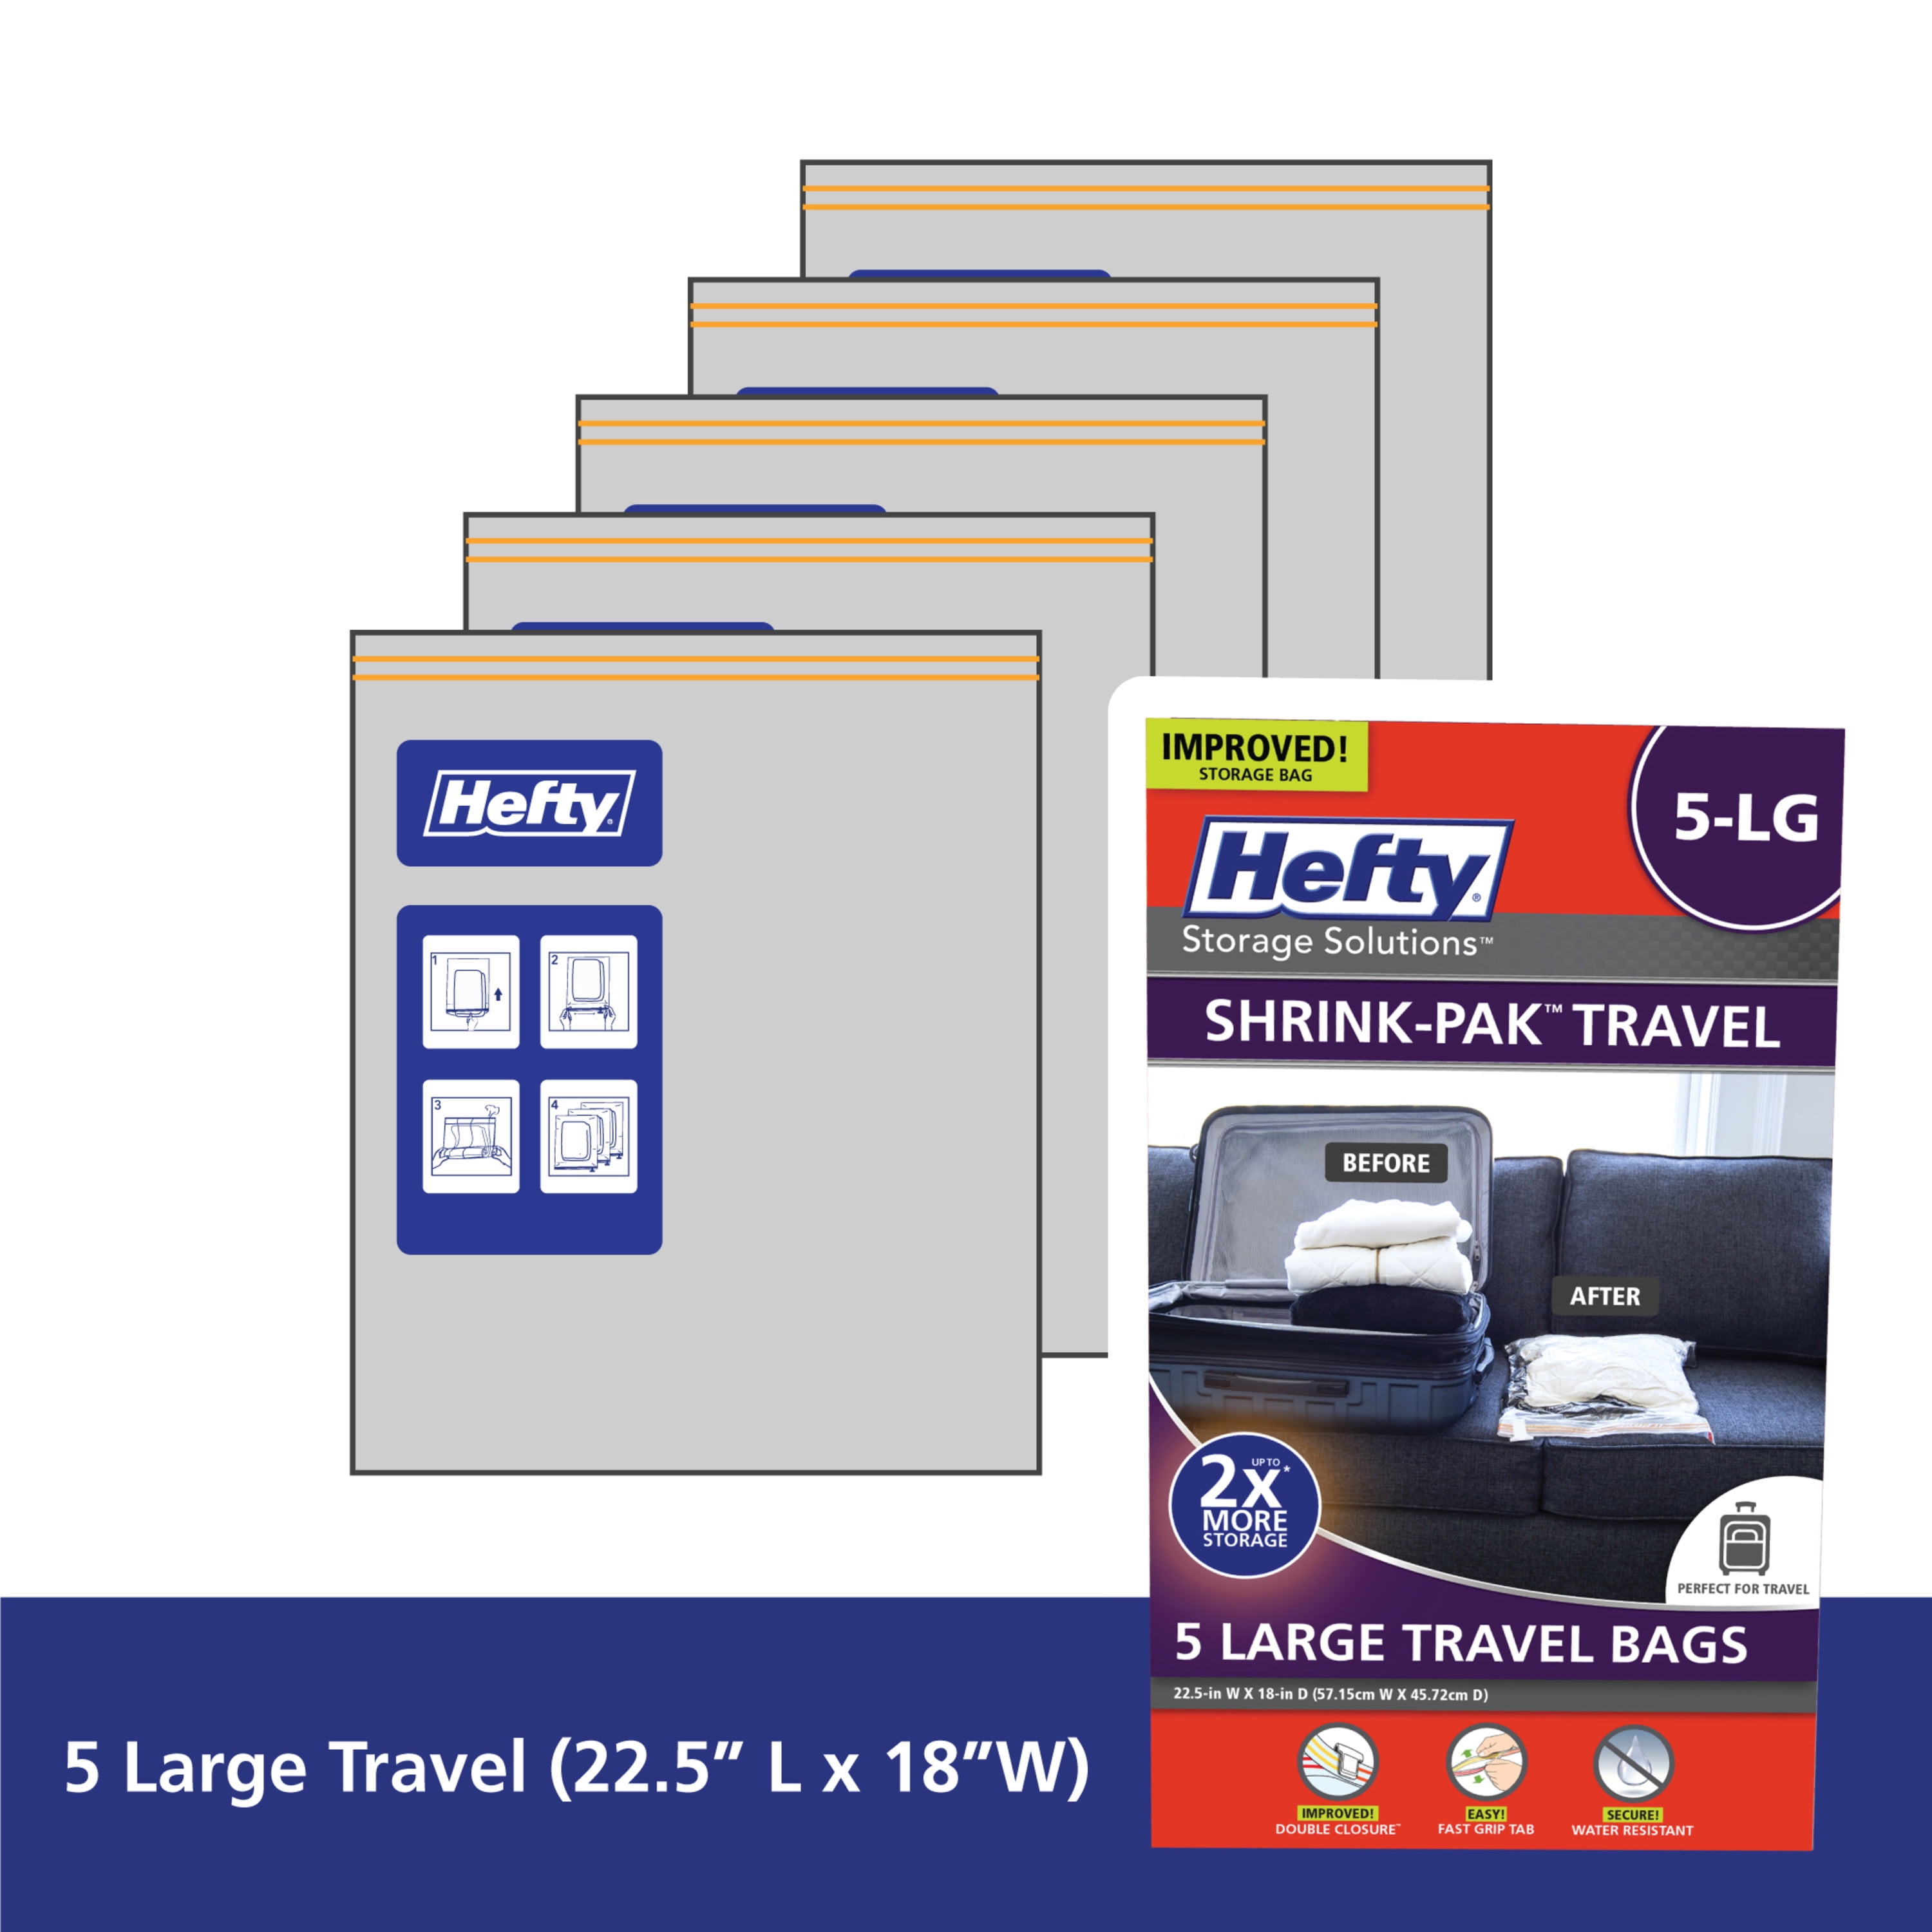 Hefty Storage Solutions Shrink-Pak Travel Compression Bags